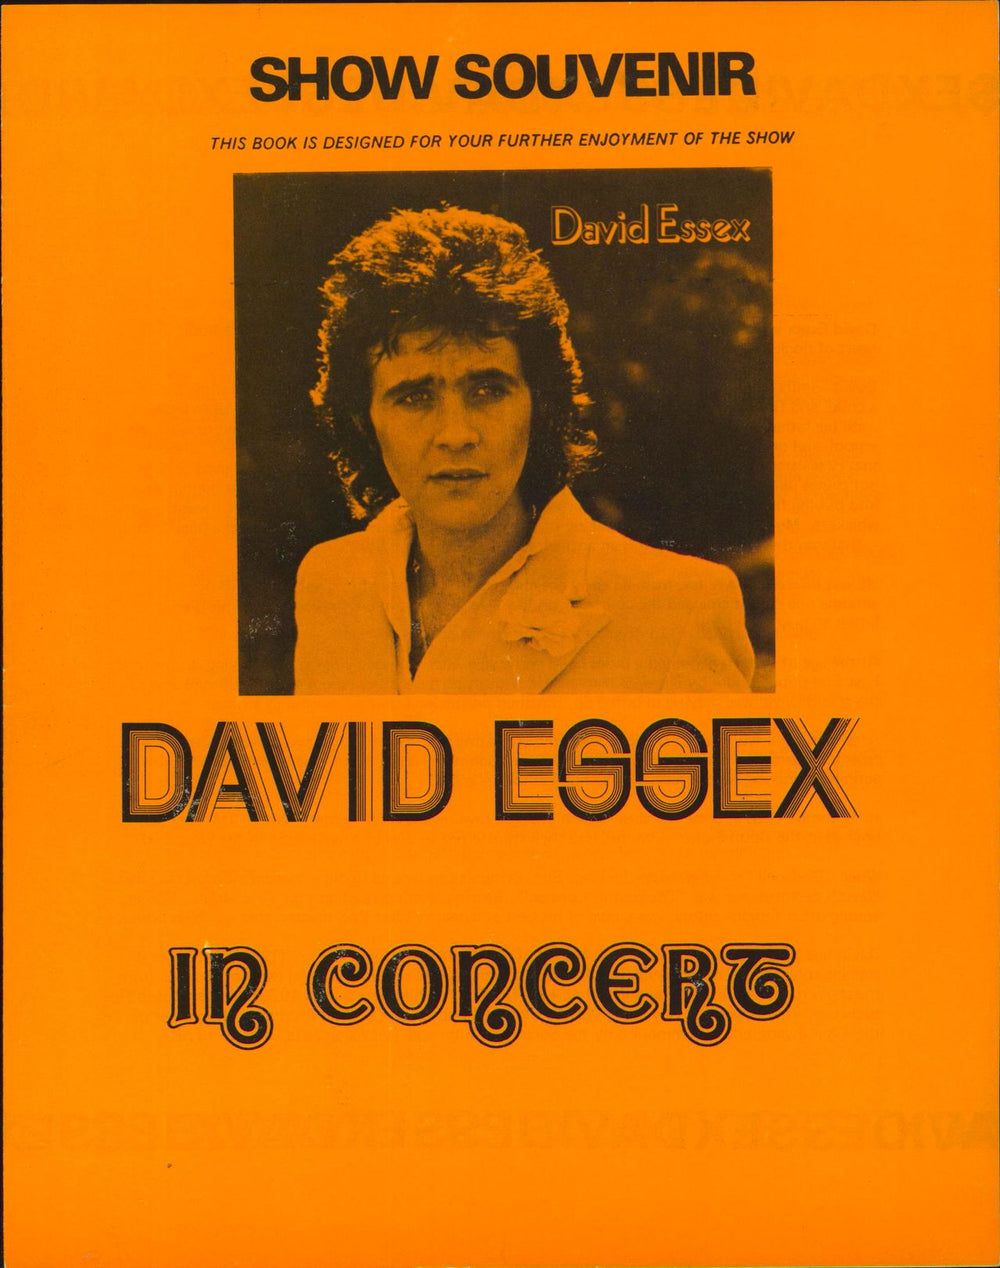 David Essex In Concert 1974 + Ticket Stub UK tour programme PROGRAMME & TICKET